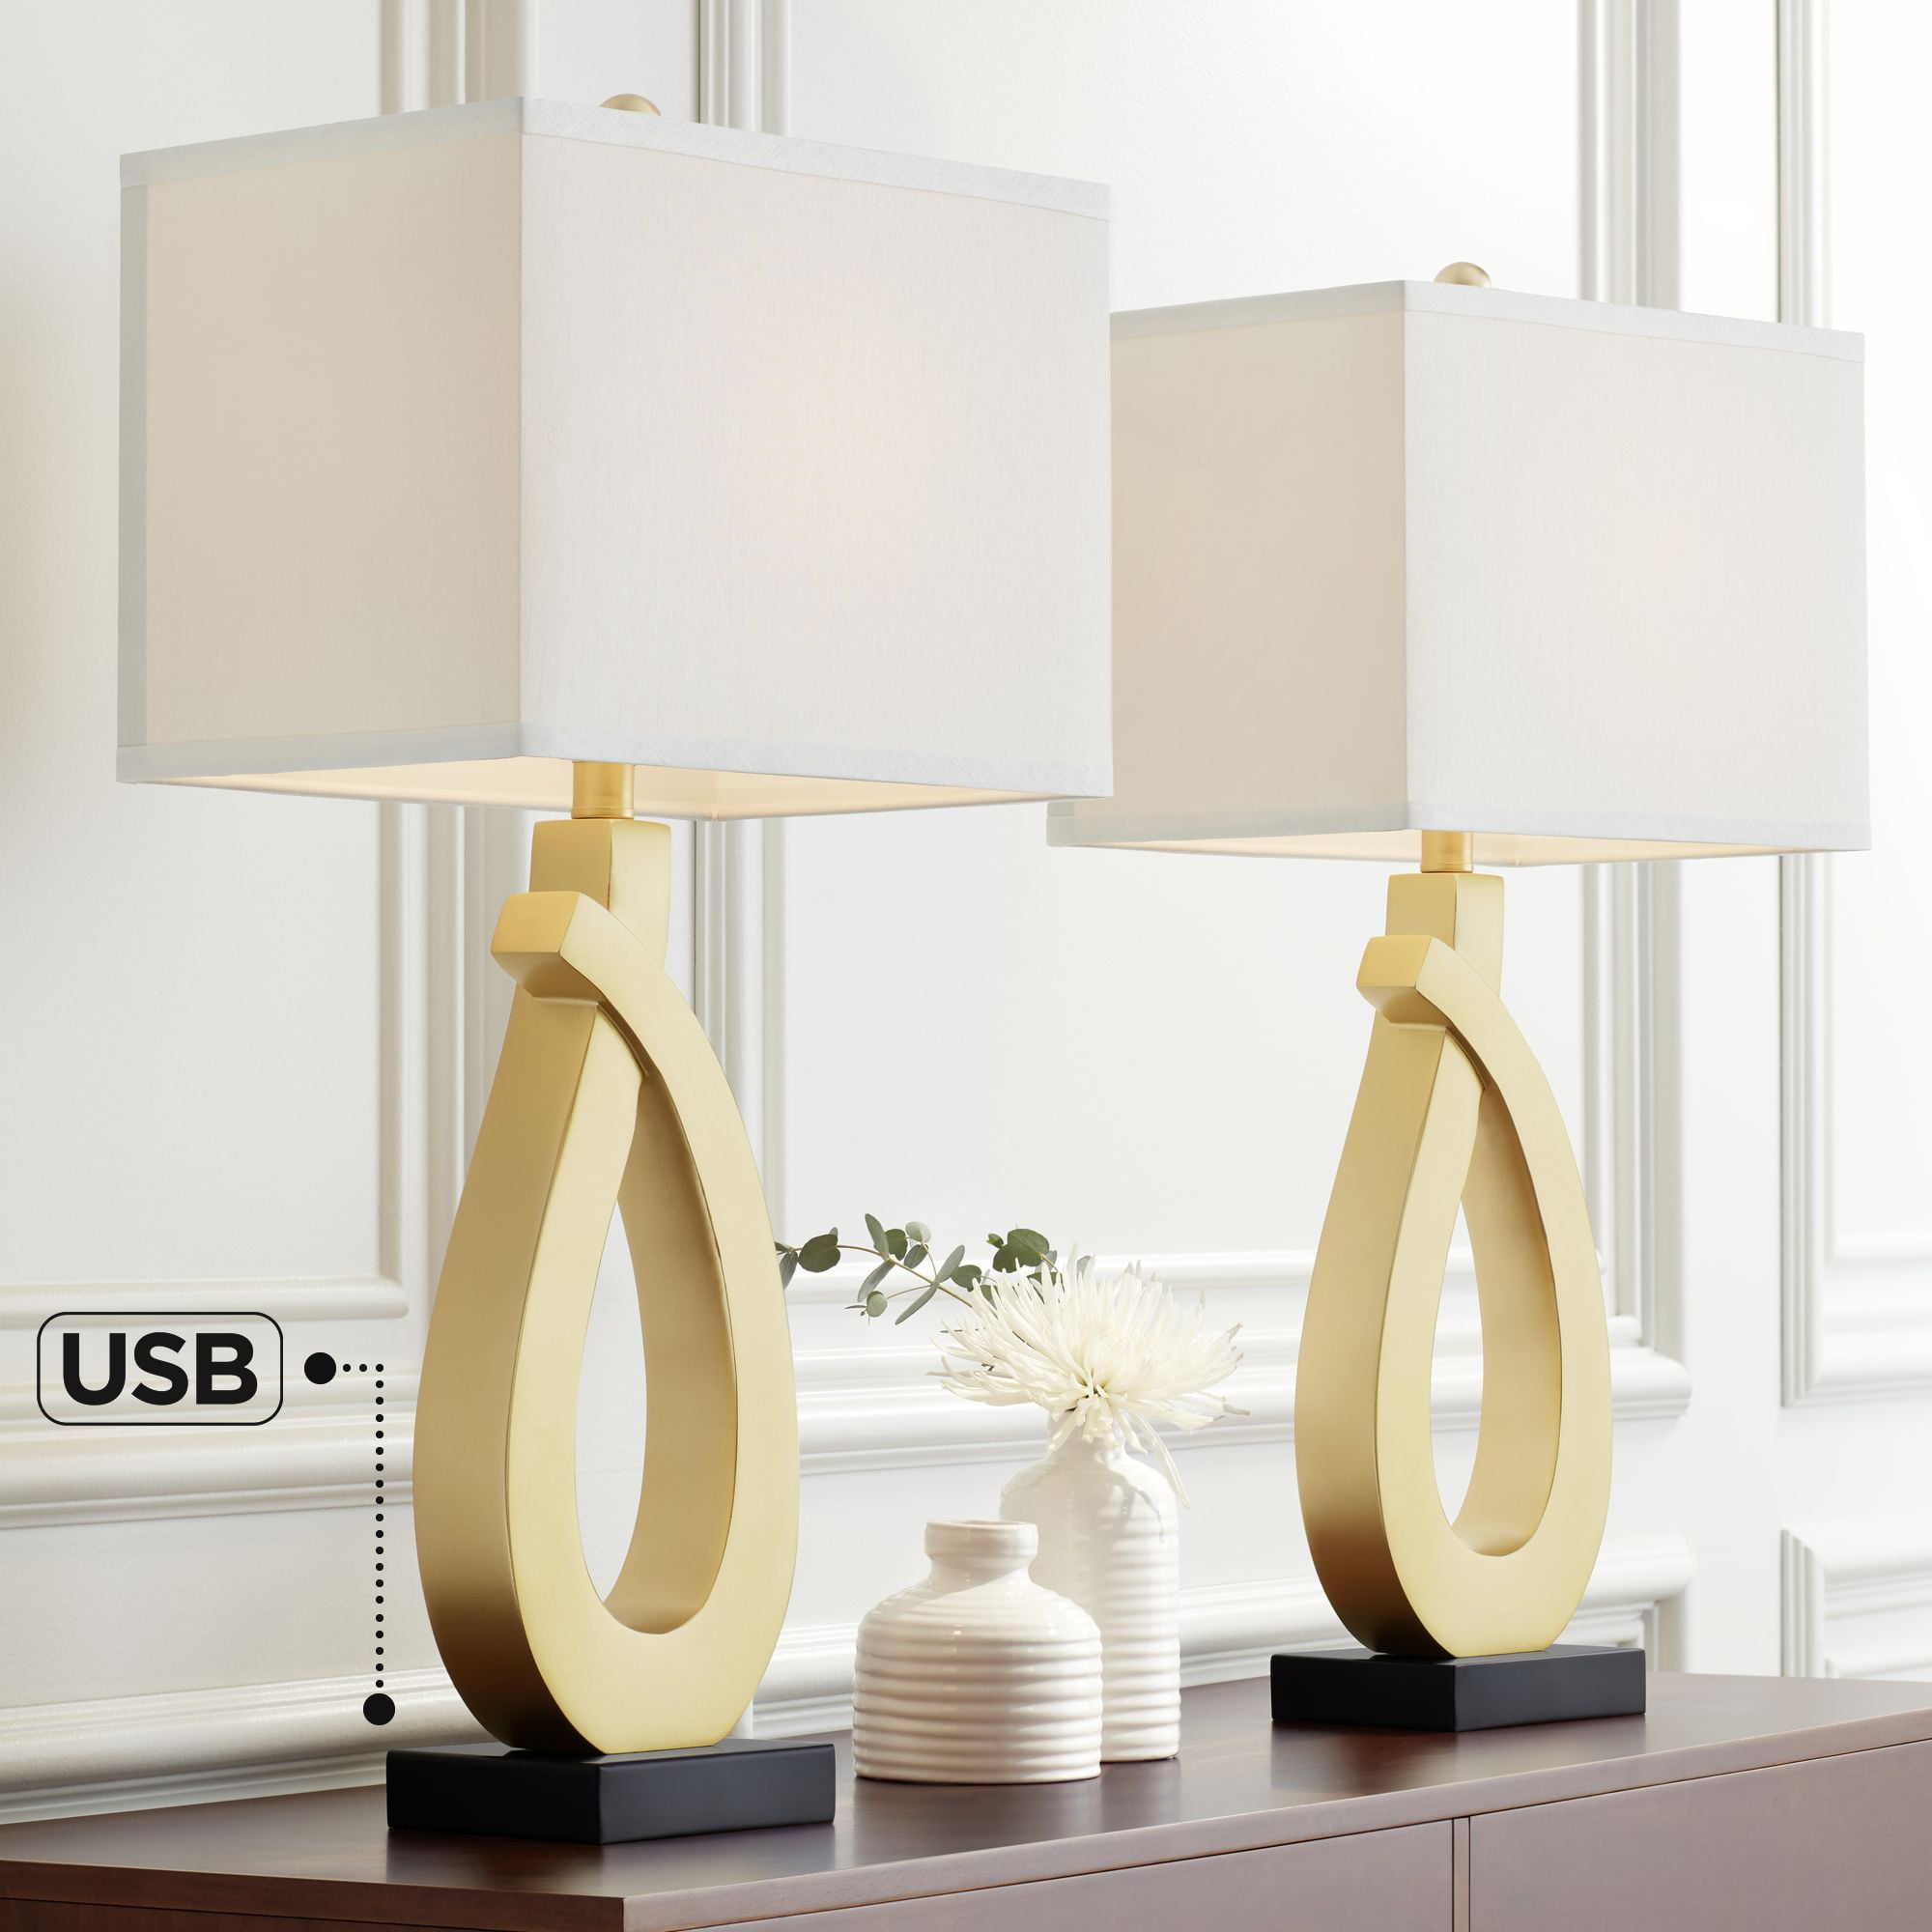 360 Lighting Simone Modern Table Lamps 28 Tall Set of 2 Sculptural Gold  Metal USB Charging Port White Rectangular Shade Bedroom Living Room